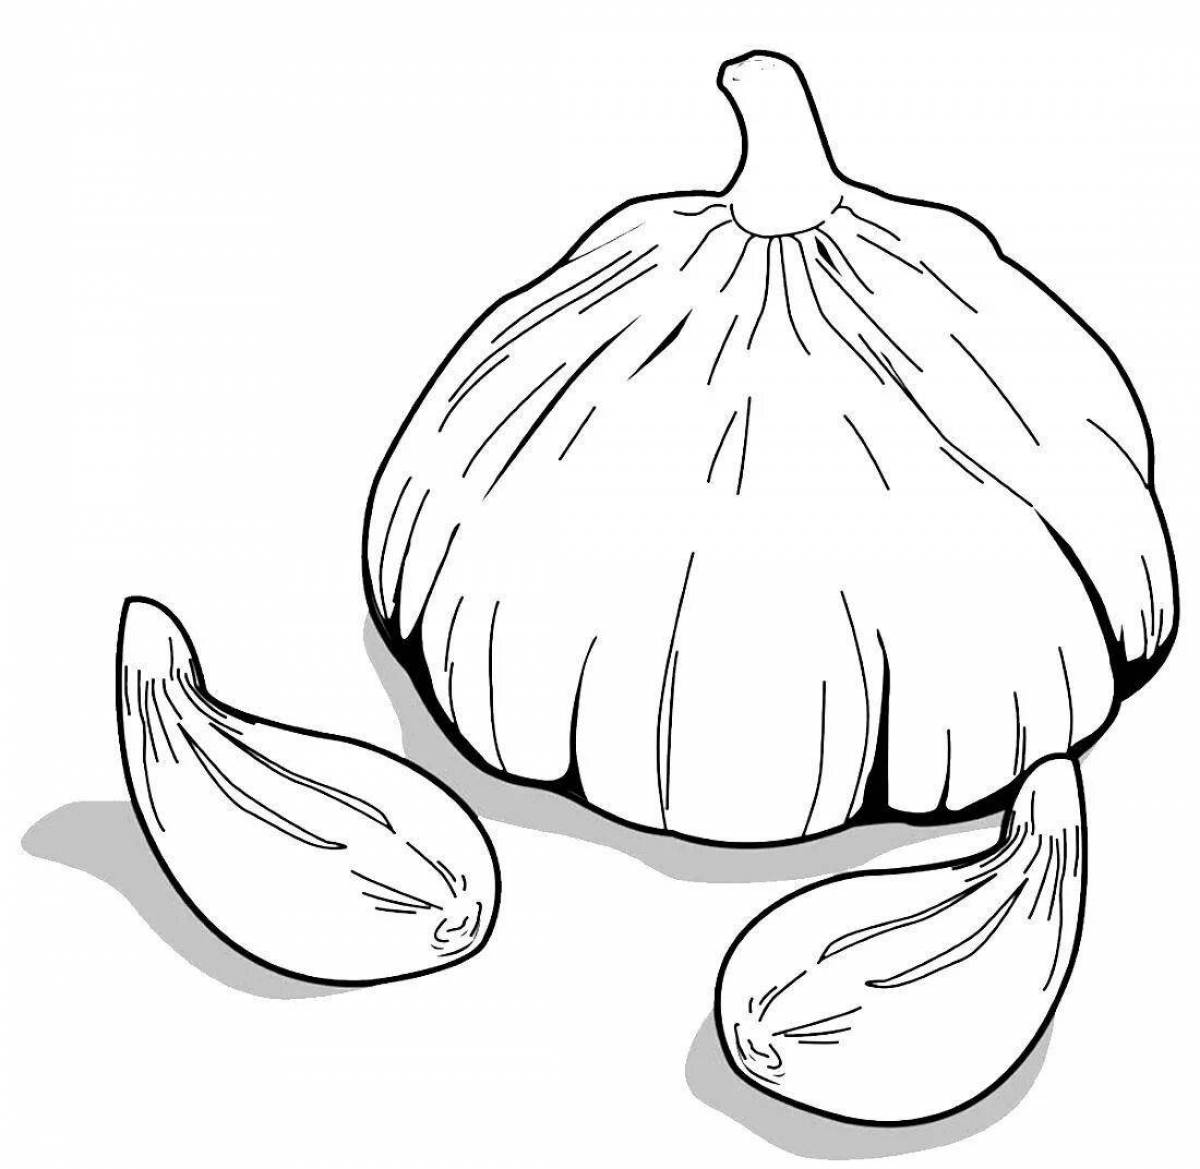 Garlic #4